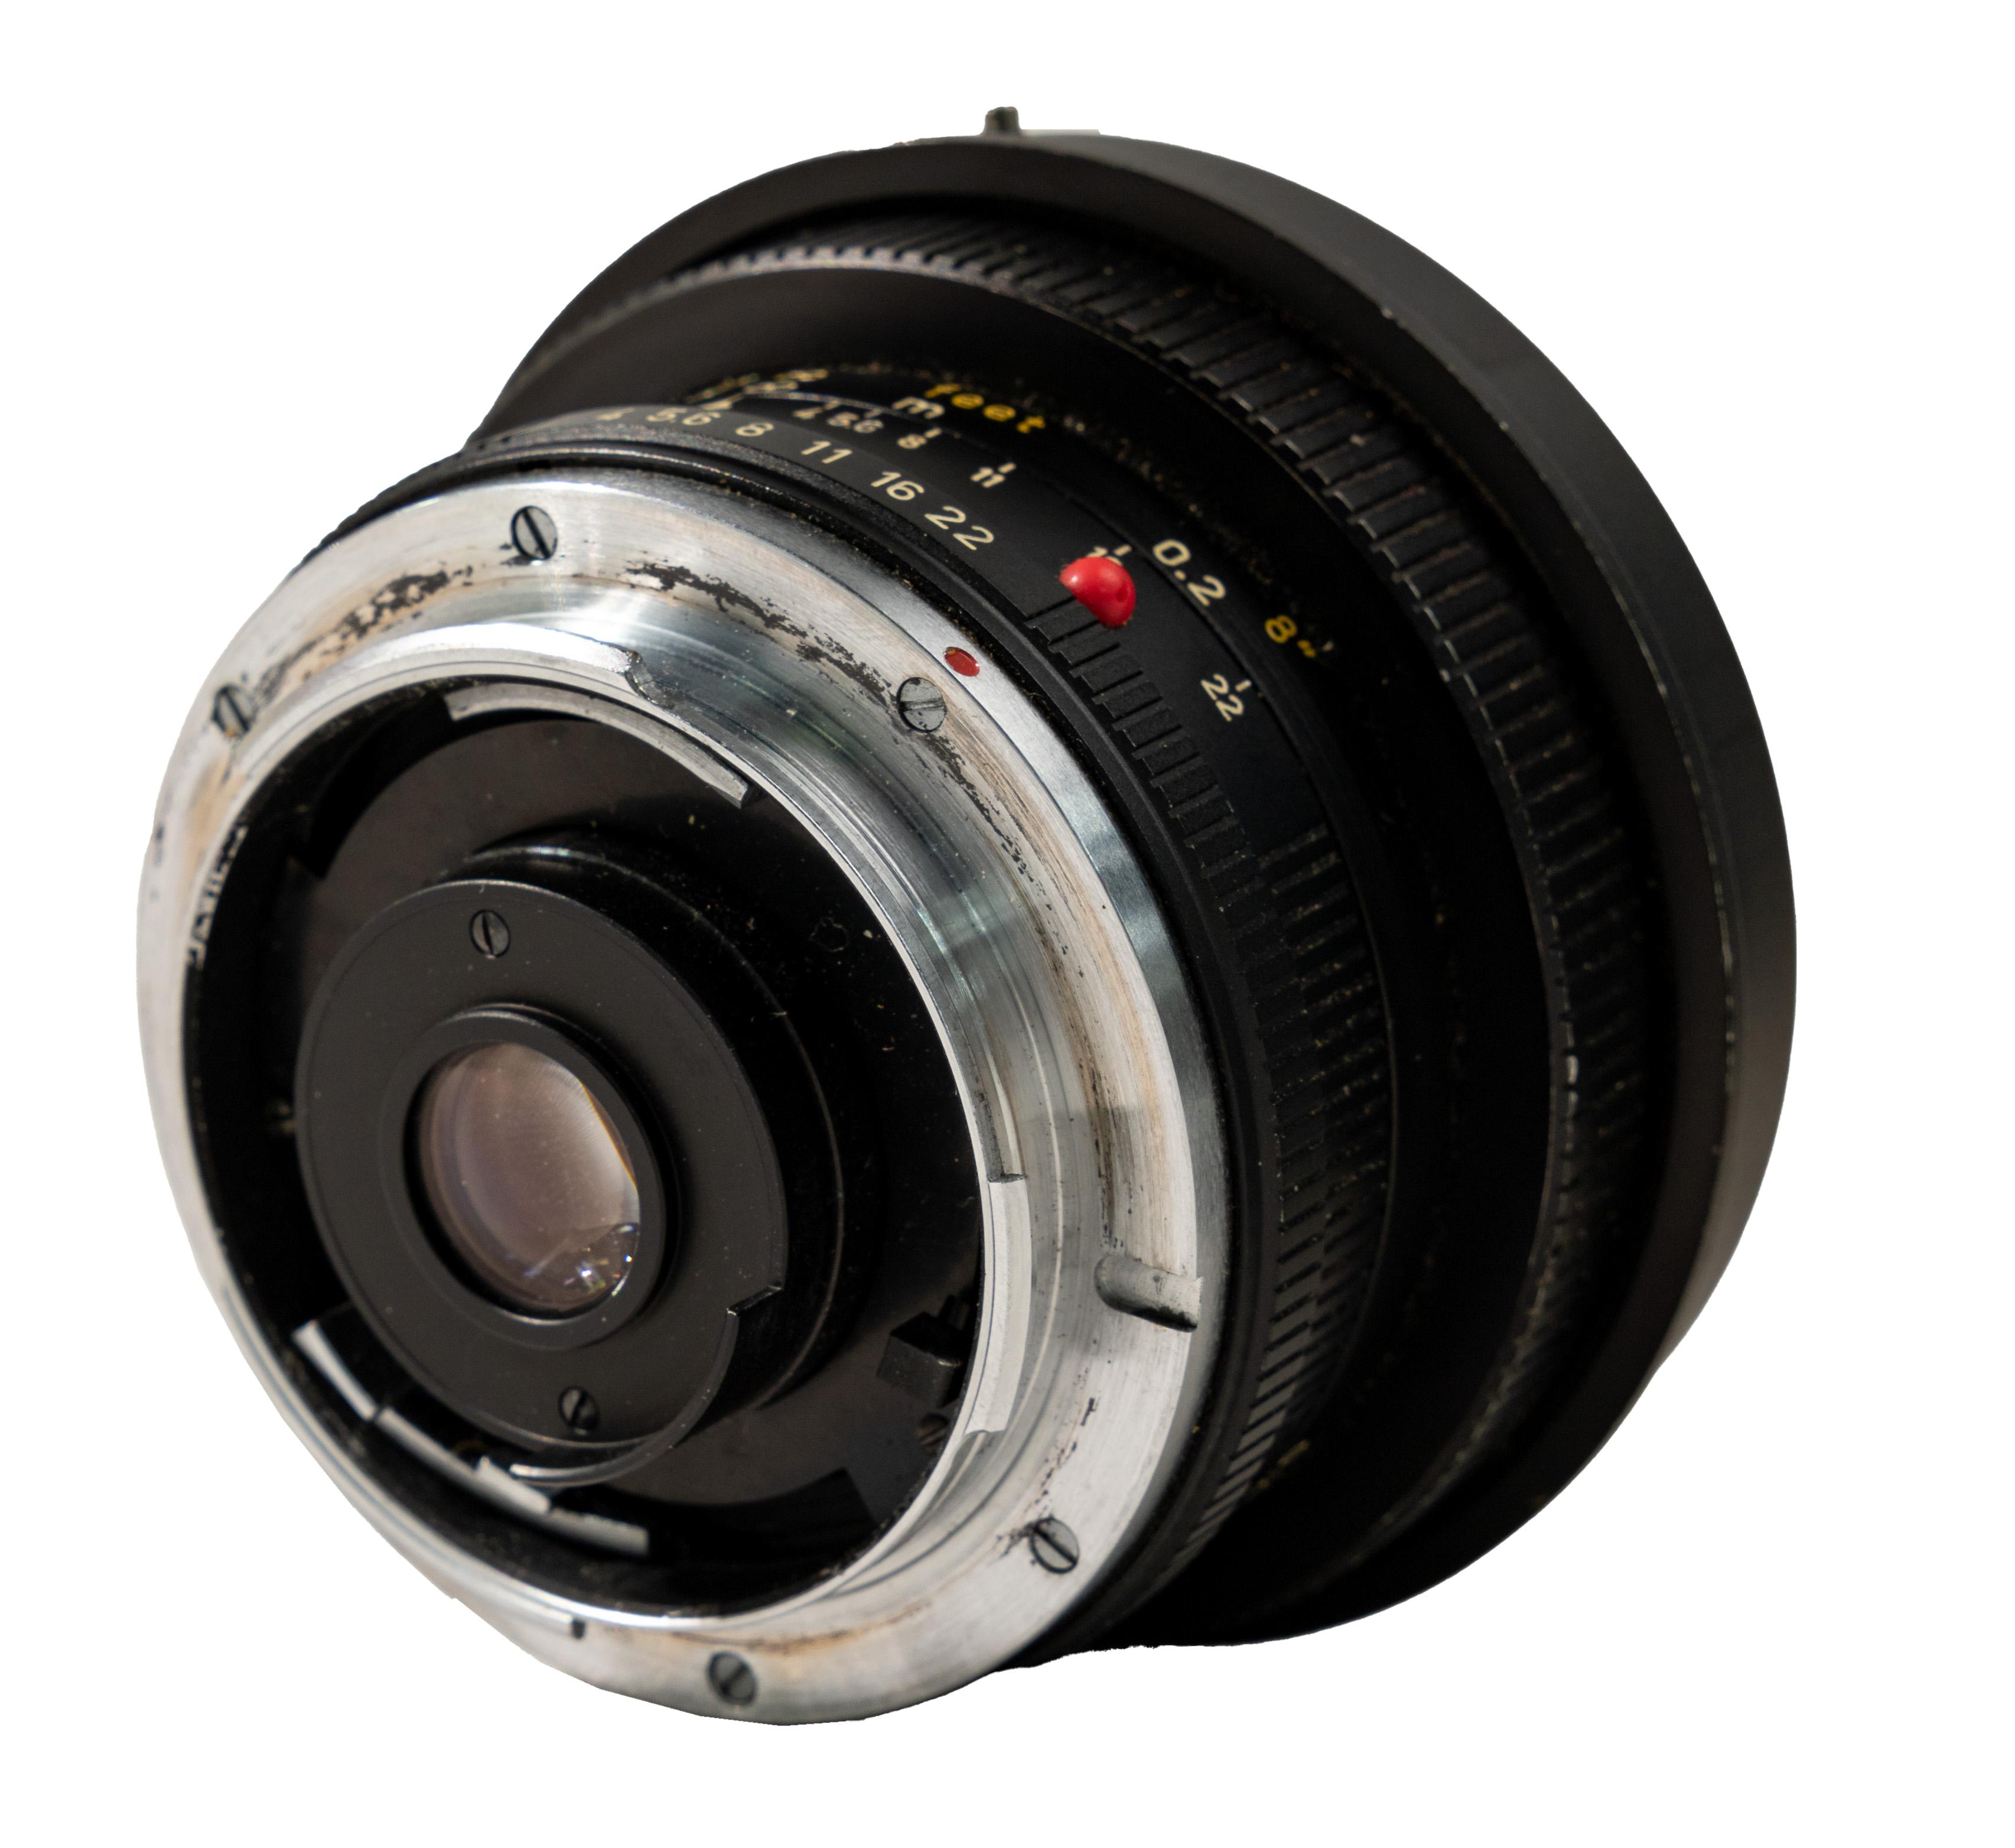 Leitz Wetzlar Super-Angulon-R 1:4/21mm Lens With Box